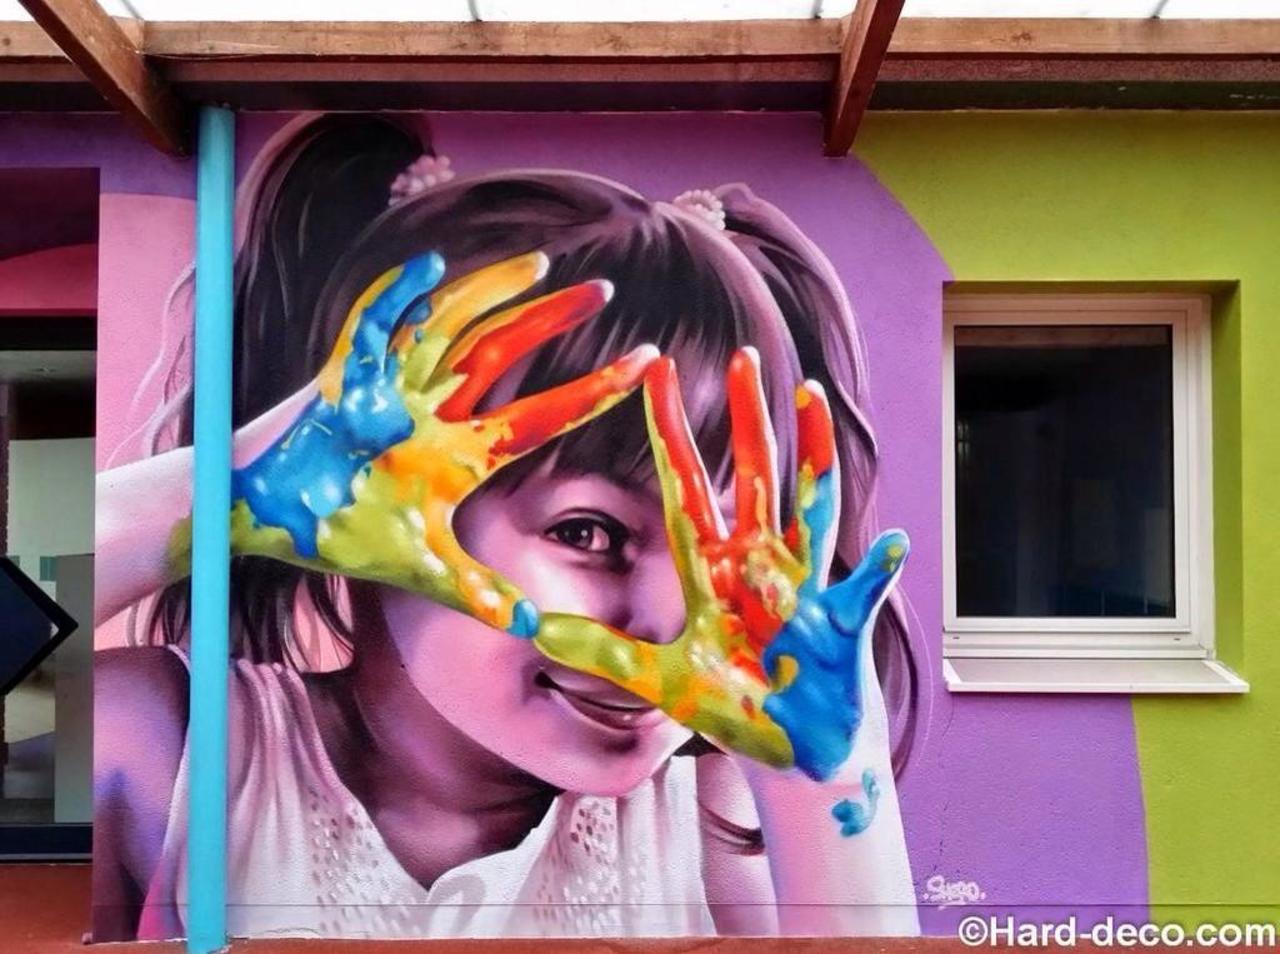 “@designopinion:Artist Hard Deco hyperrealistic StreetArt portrait-Paris, Fr #art #mural #graffiti #streetart http://t.co/F3xo5tzGI2”WOW!!